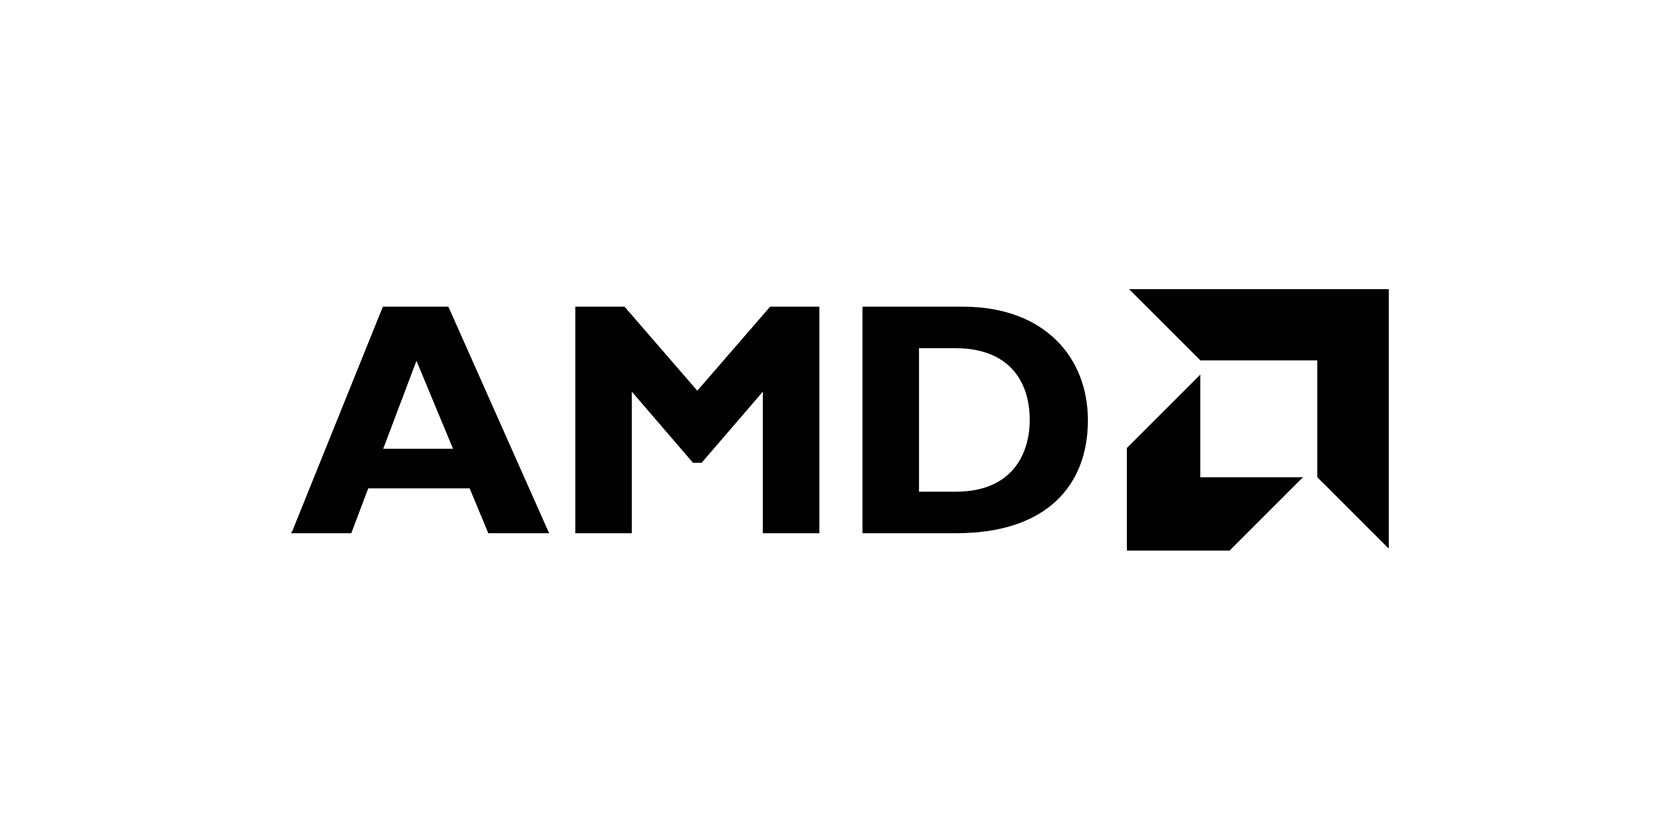 AMD logo on a white background